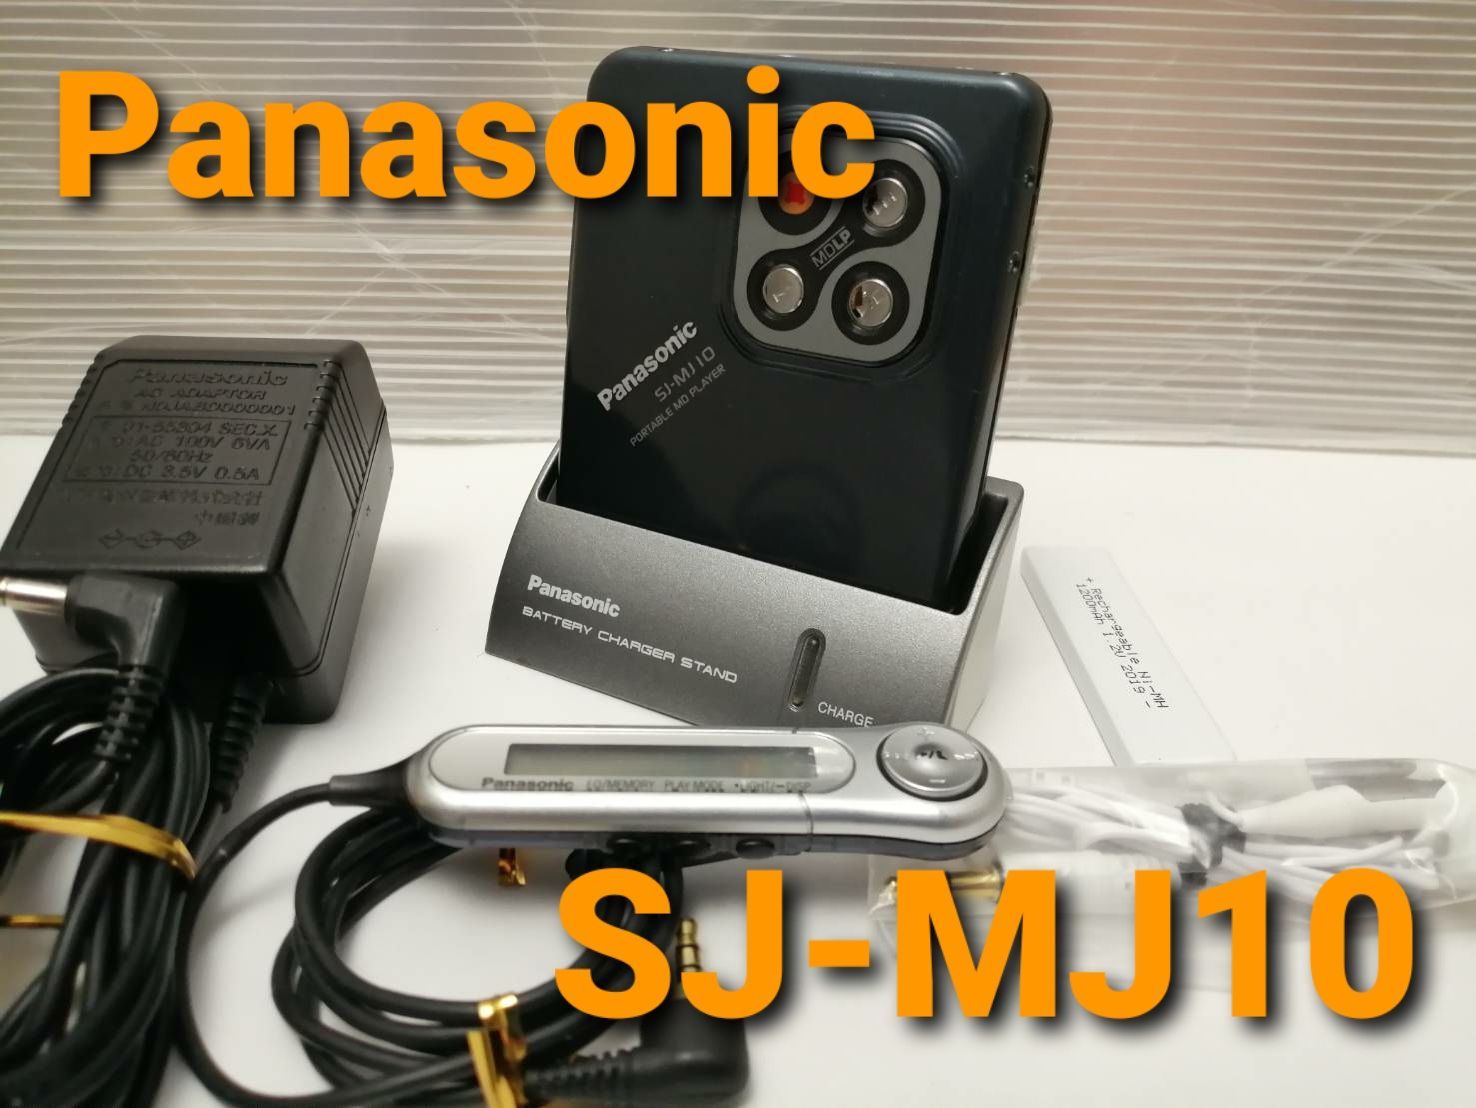 Panasonic ポータブルMDプレーヤー SJ-MJ10 - オーディオ機器